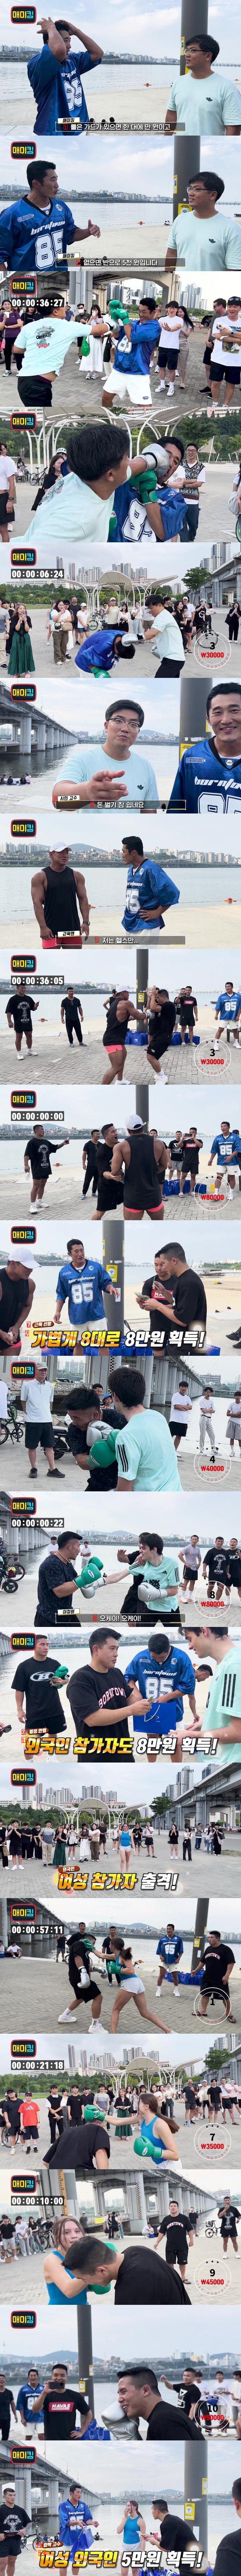 Kim Dong Hyun giving money to Han River